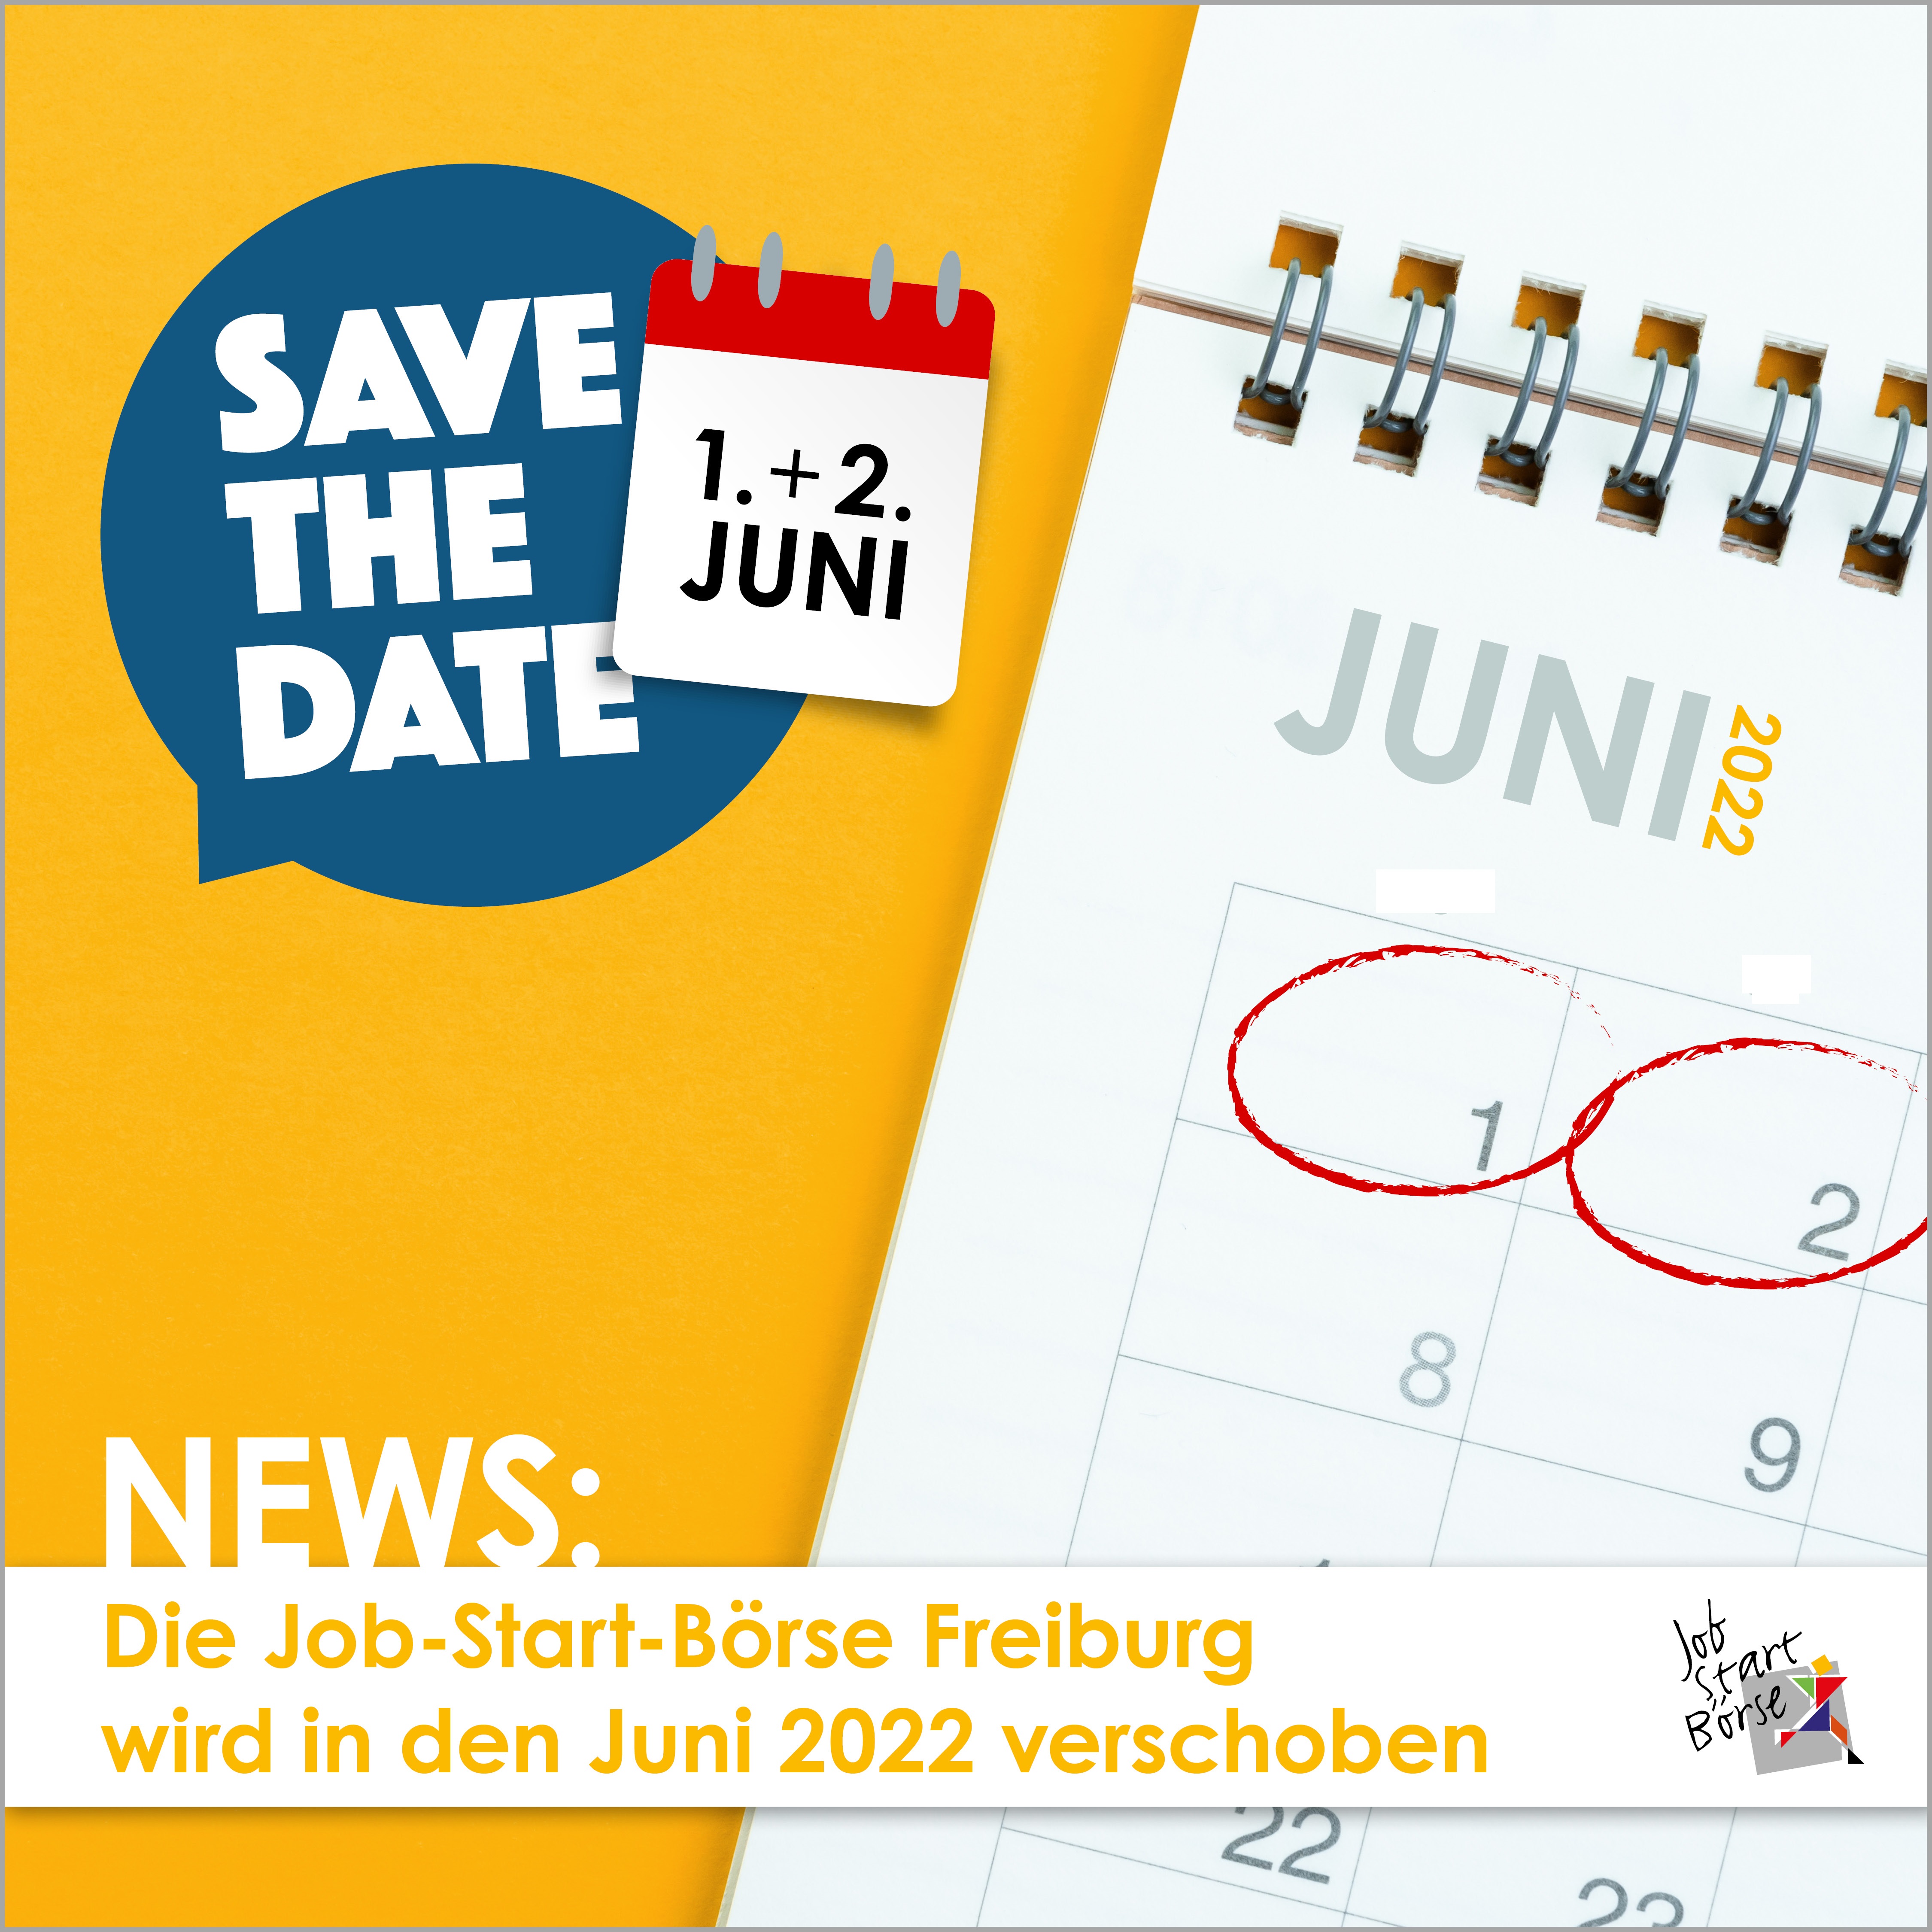 Job-Start-Börse Save the date 1. + 2. Juni 